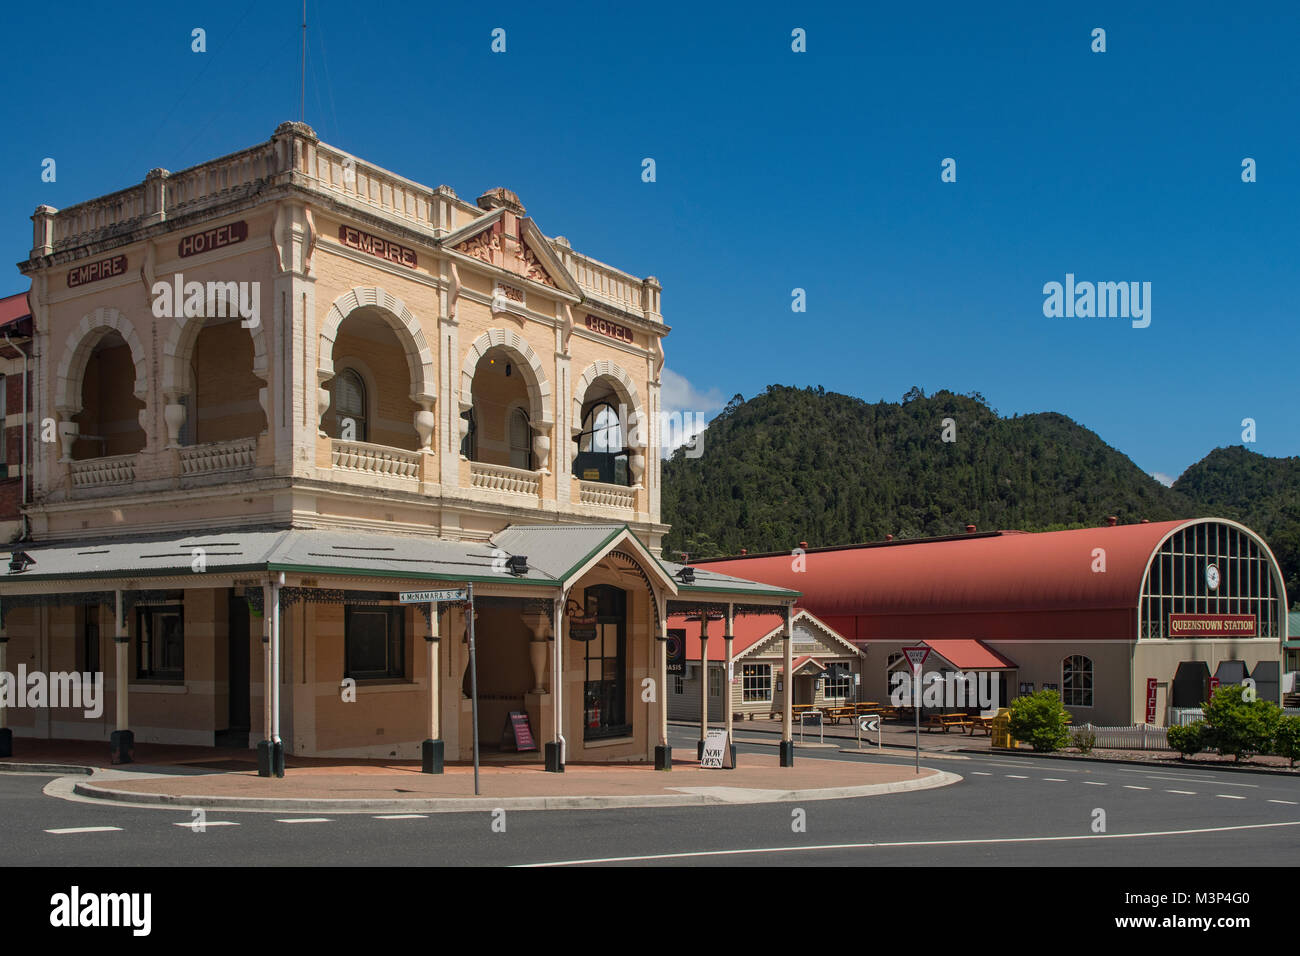 Hôtel Empire et gare, Queenstown, Tasmanie, Australie Banque D'Images